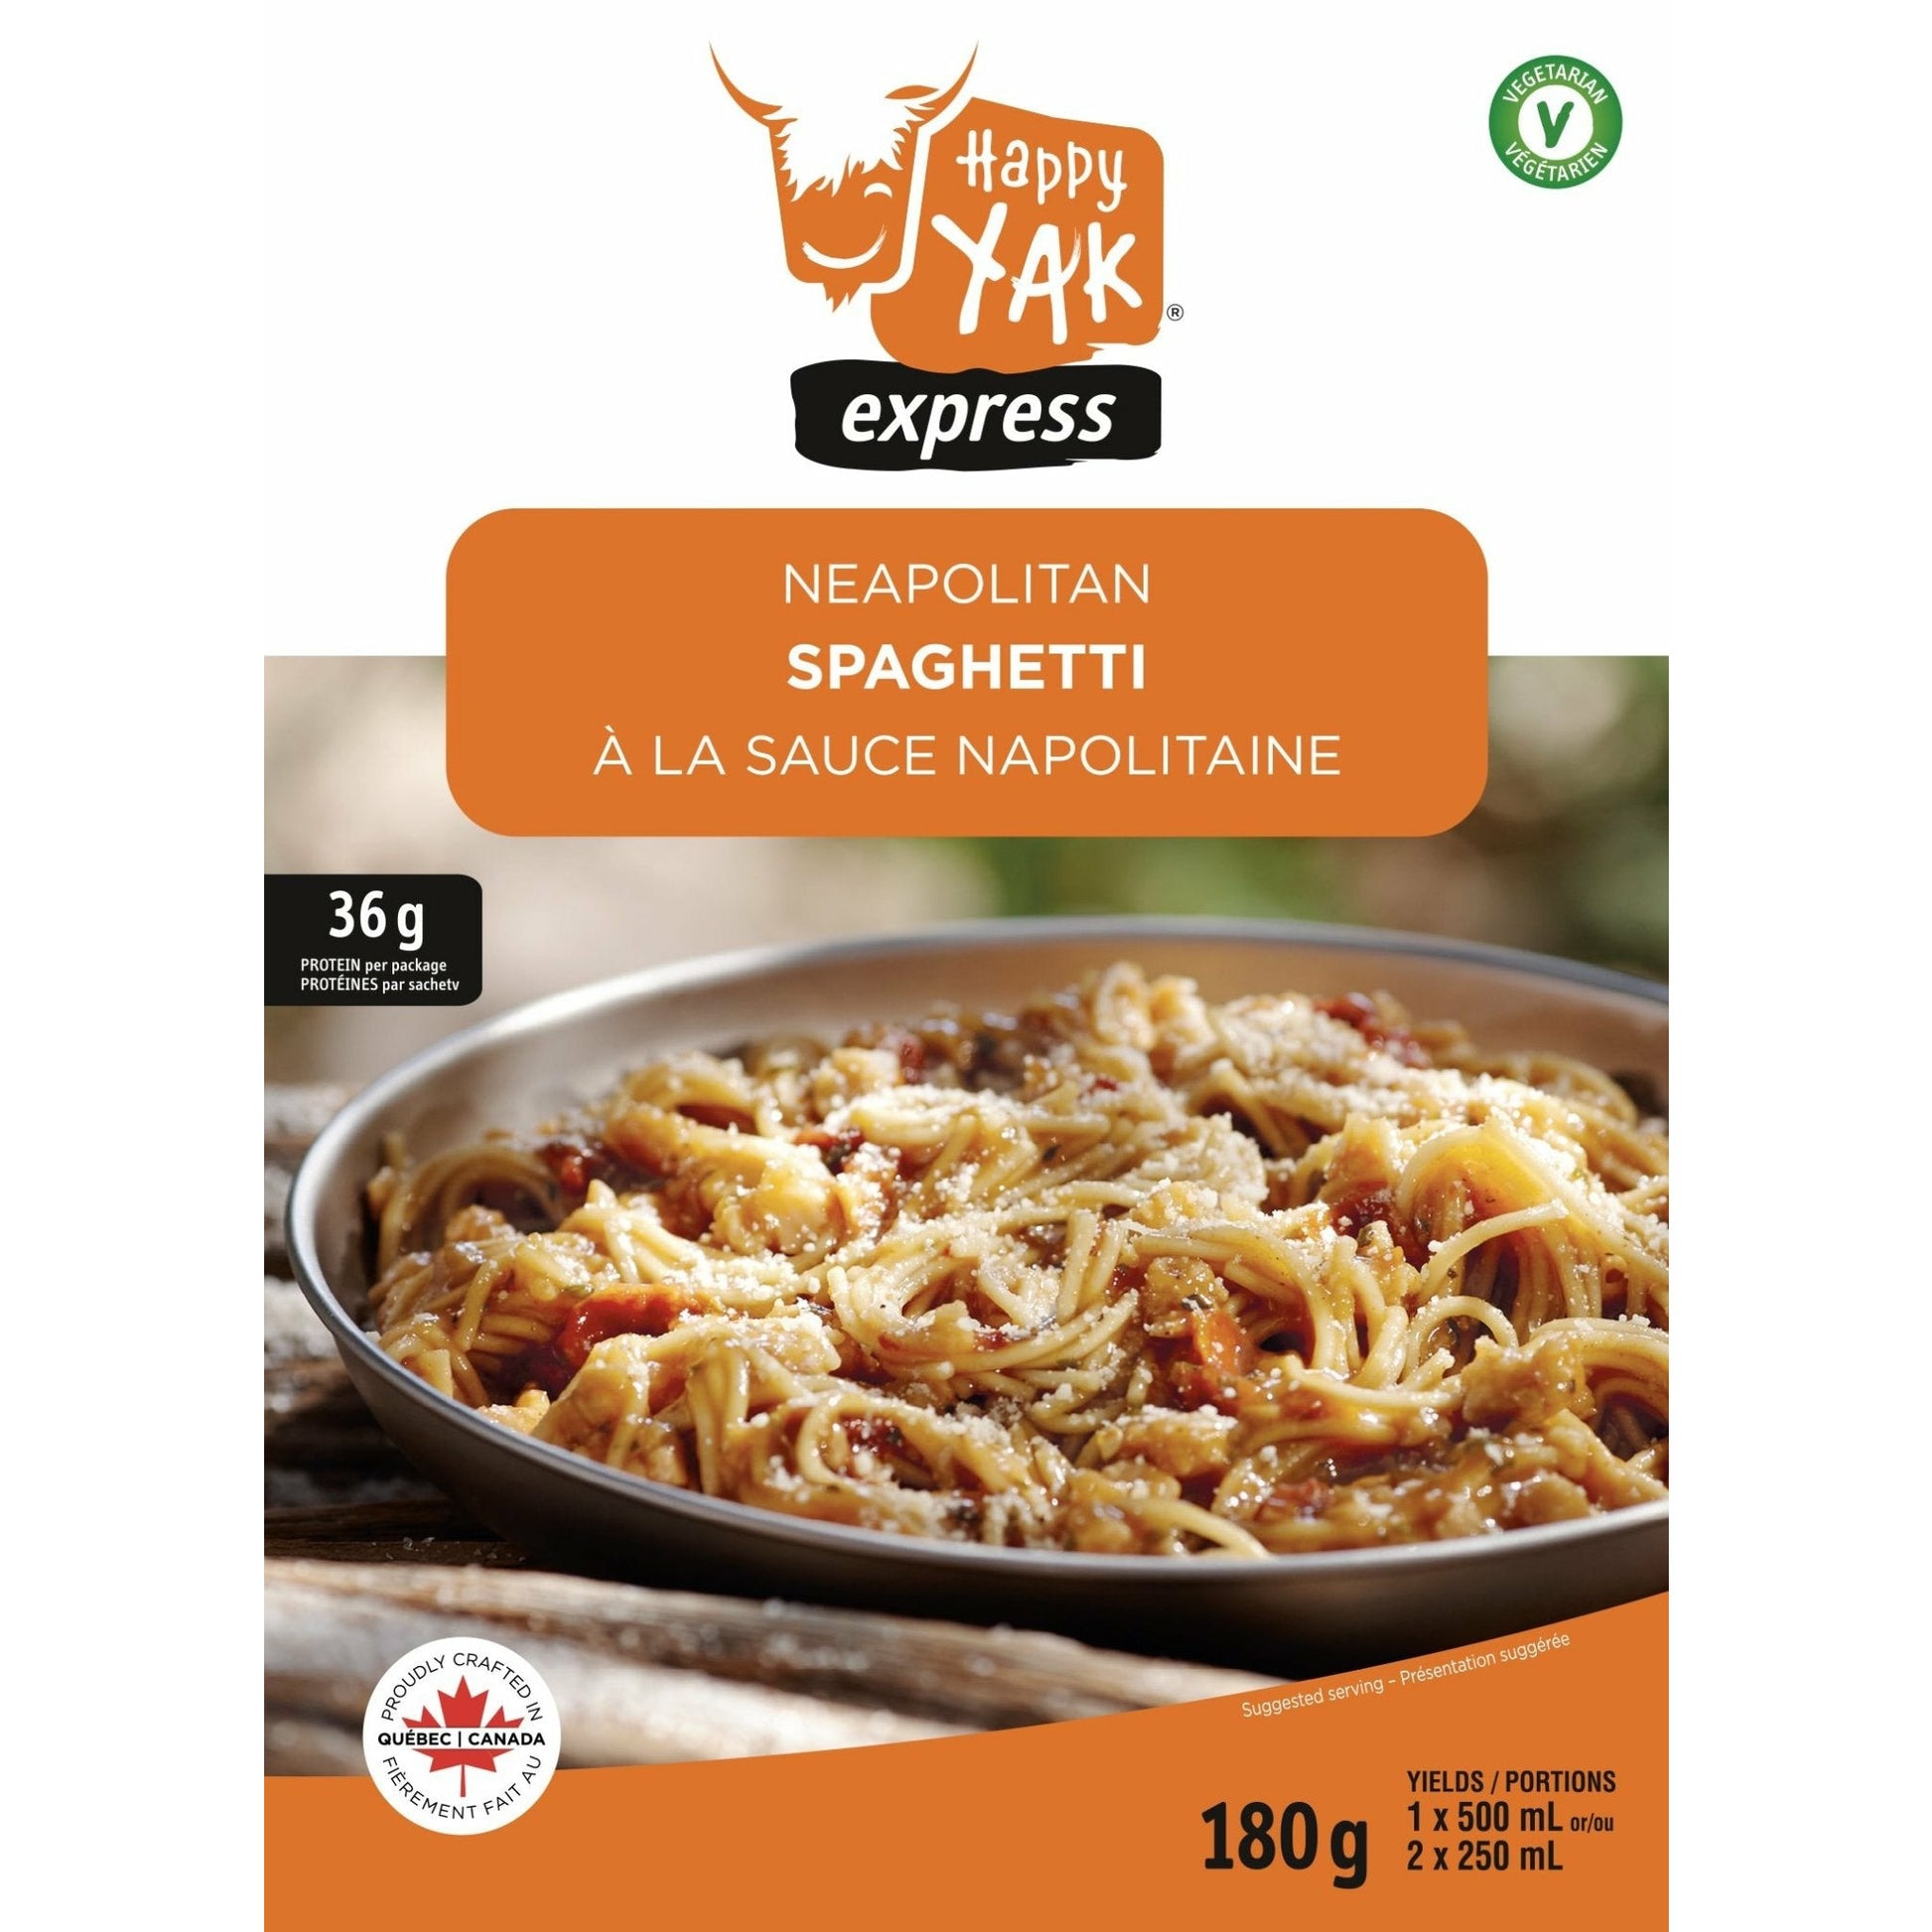 Happy Yak Neapolitan Spaghetti